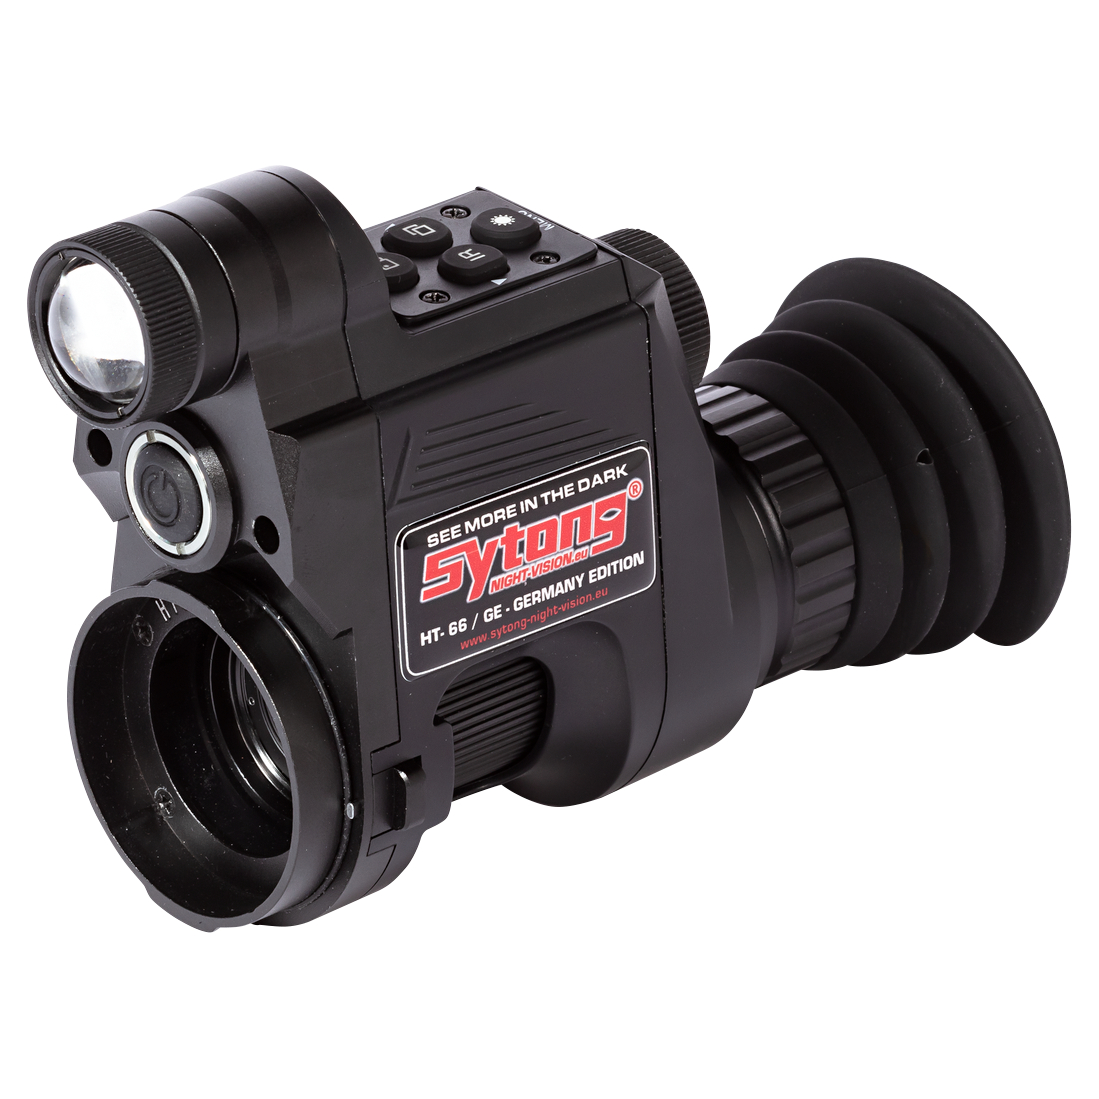 Sytong Night Vision Device HT-66 Hunting | 16 low -NV850 Askari at Shop German-Edition mm prices with Lens